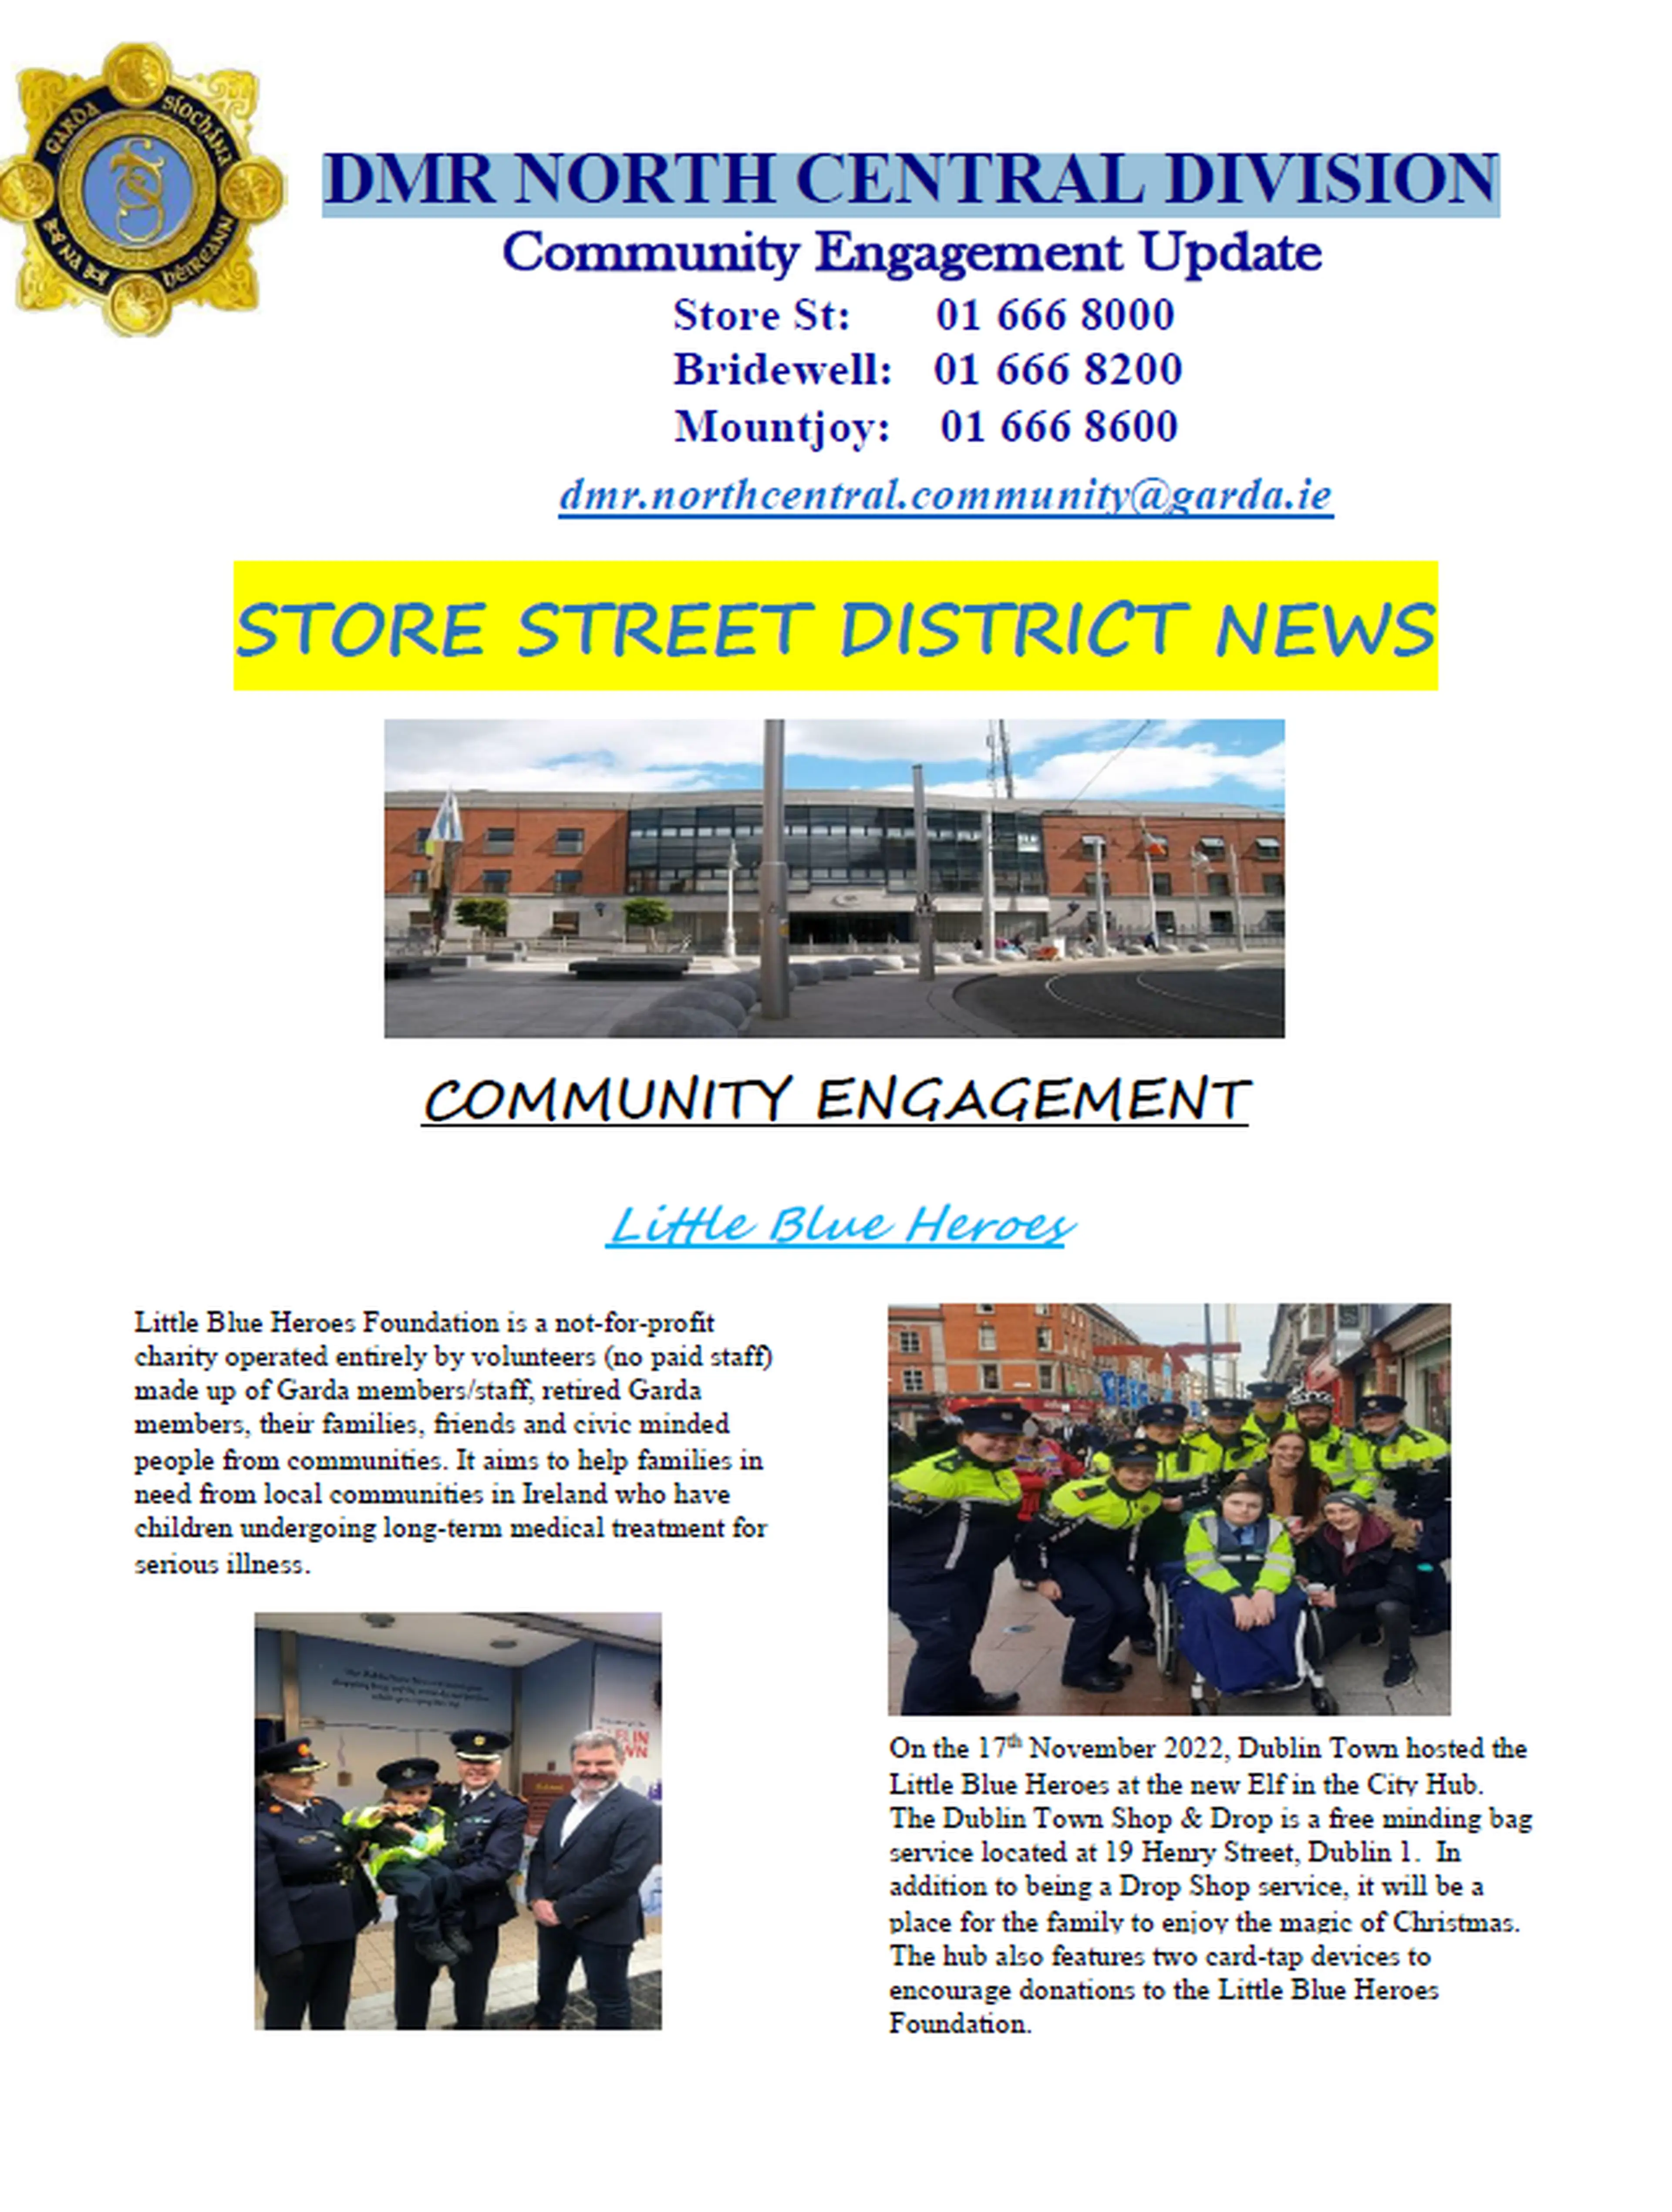 Store Street Community Engagement Image